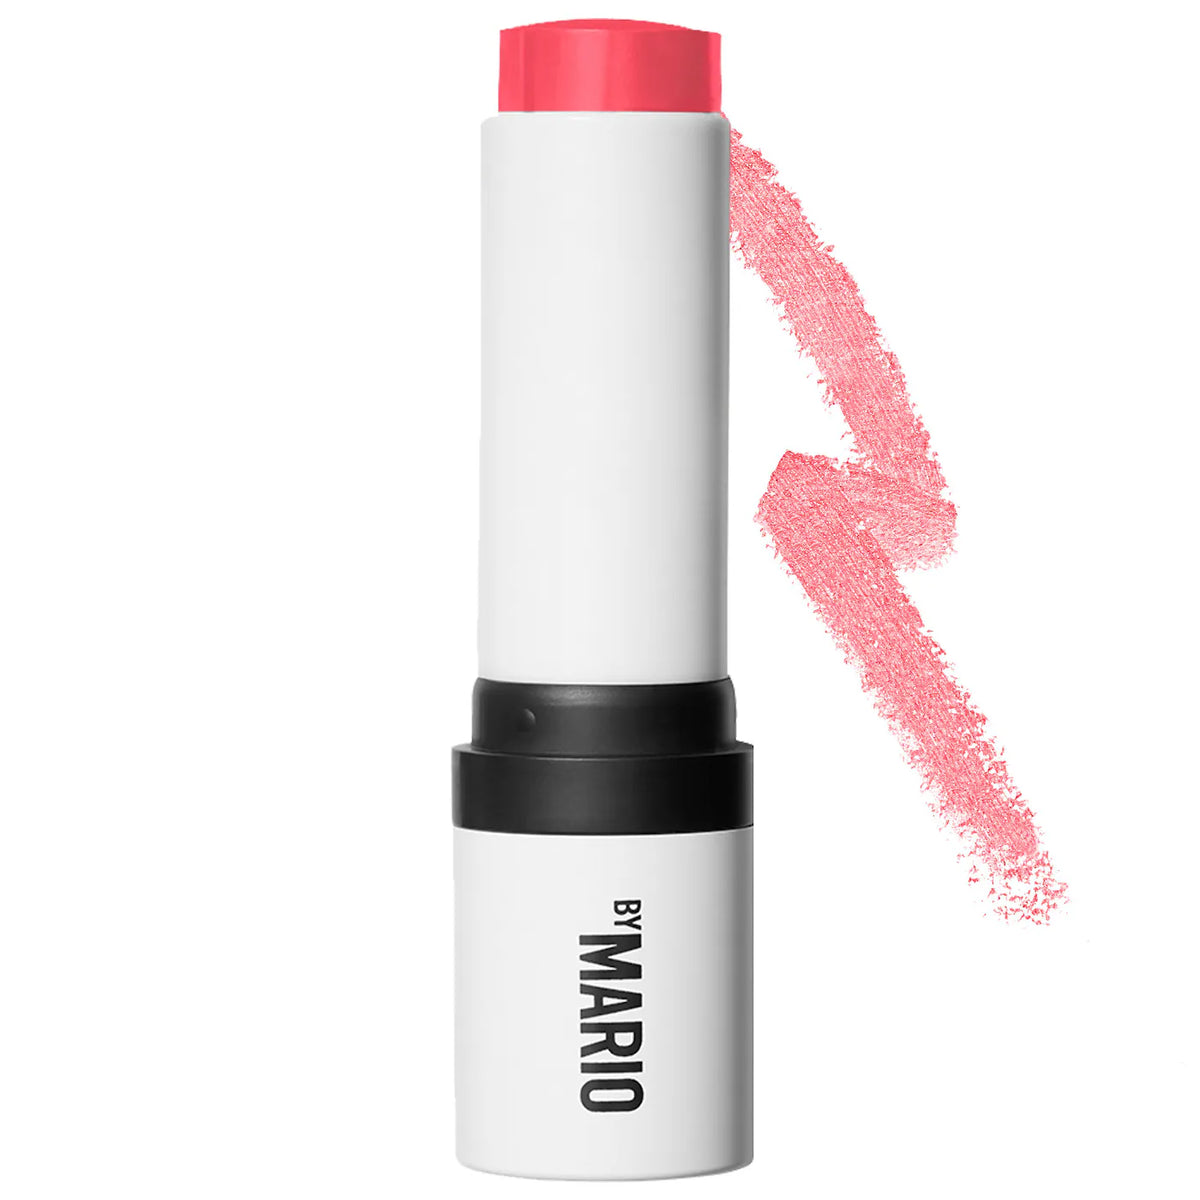 MAKEUP BY MARIO Soft Pop Blush Stick Cream blush Volare Makeup Raspberry - bright pink  